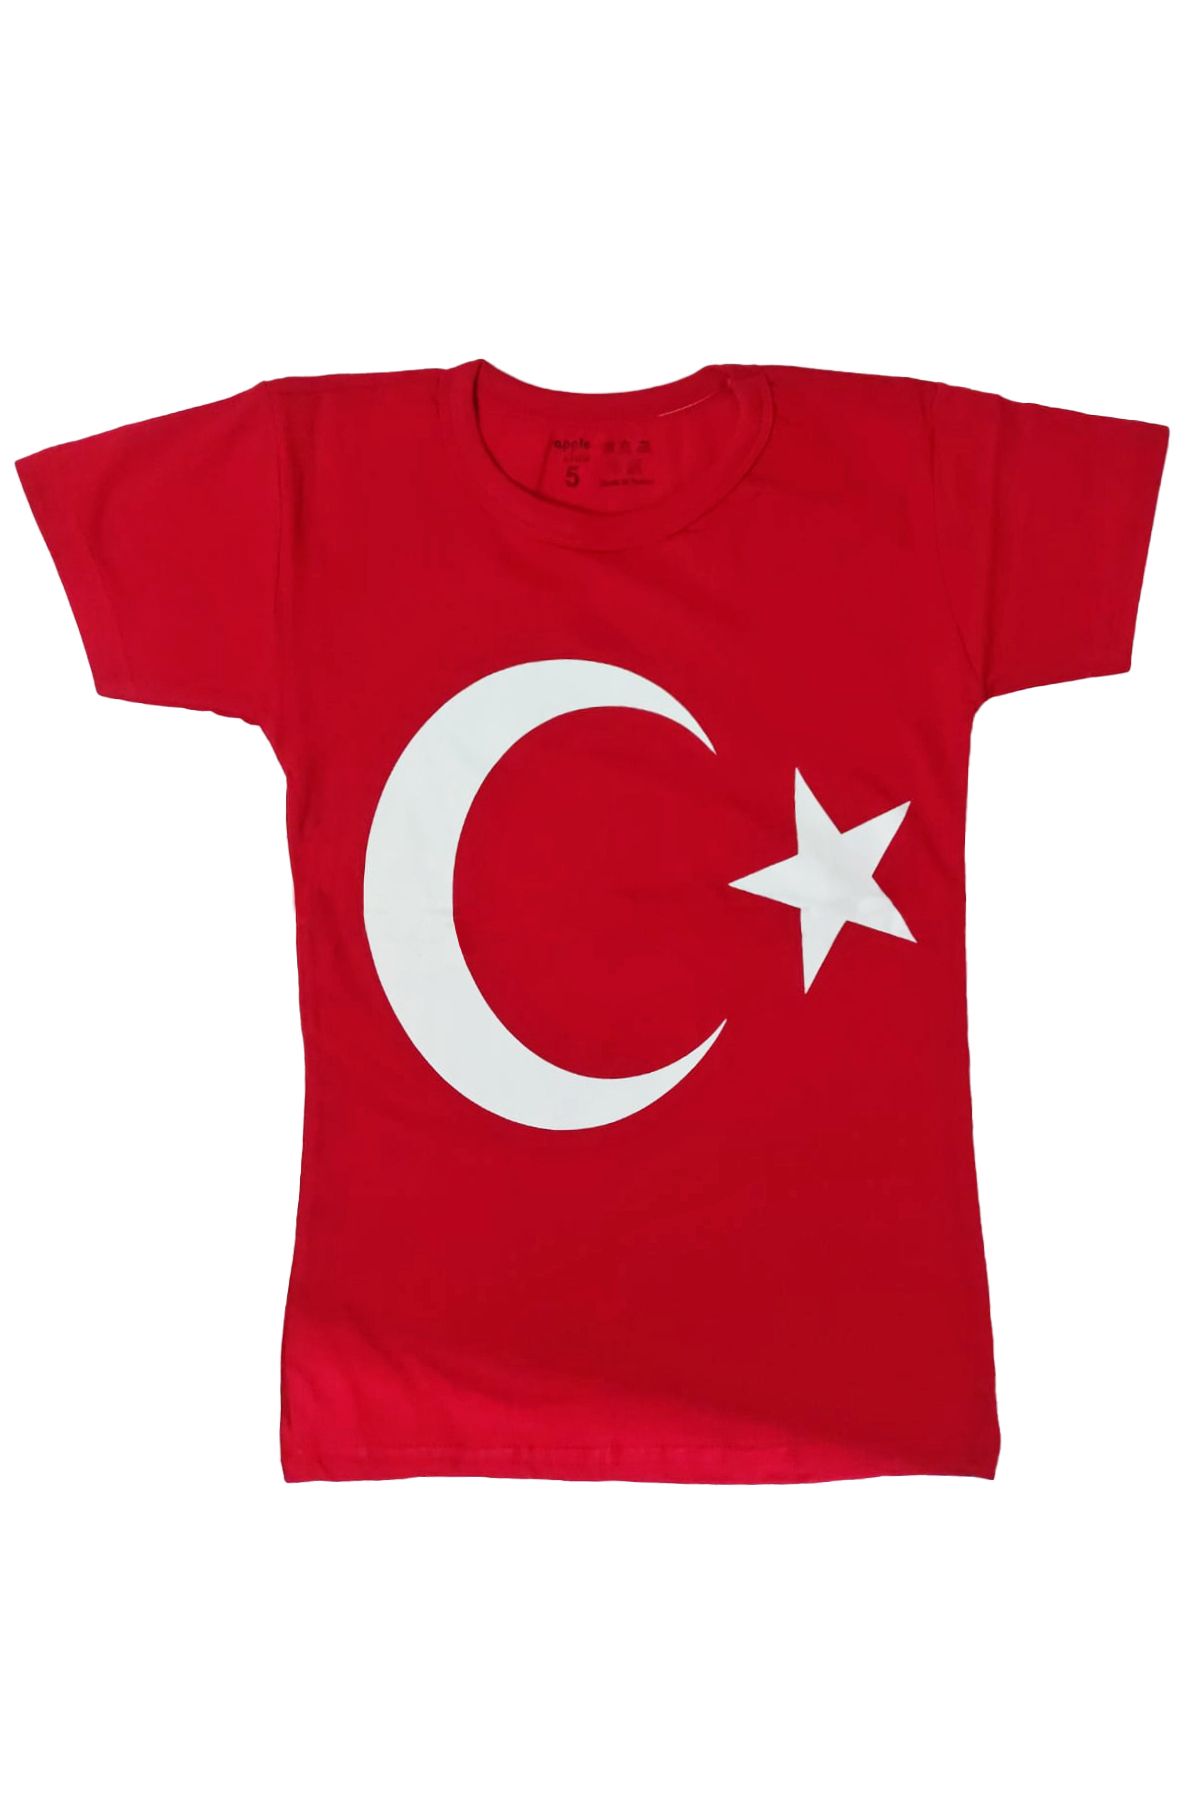 Limmy Türk Bayraklı Tişört Pamuklu Kırmızı Ay Yıldız Çocuk Tshirt- 3 Yaş